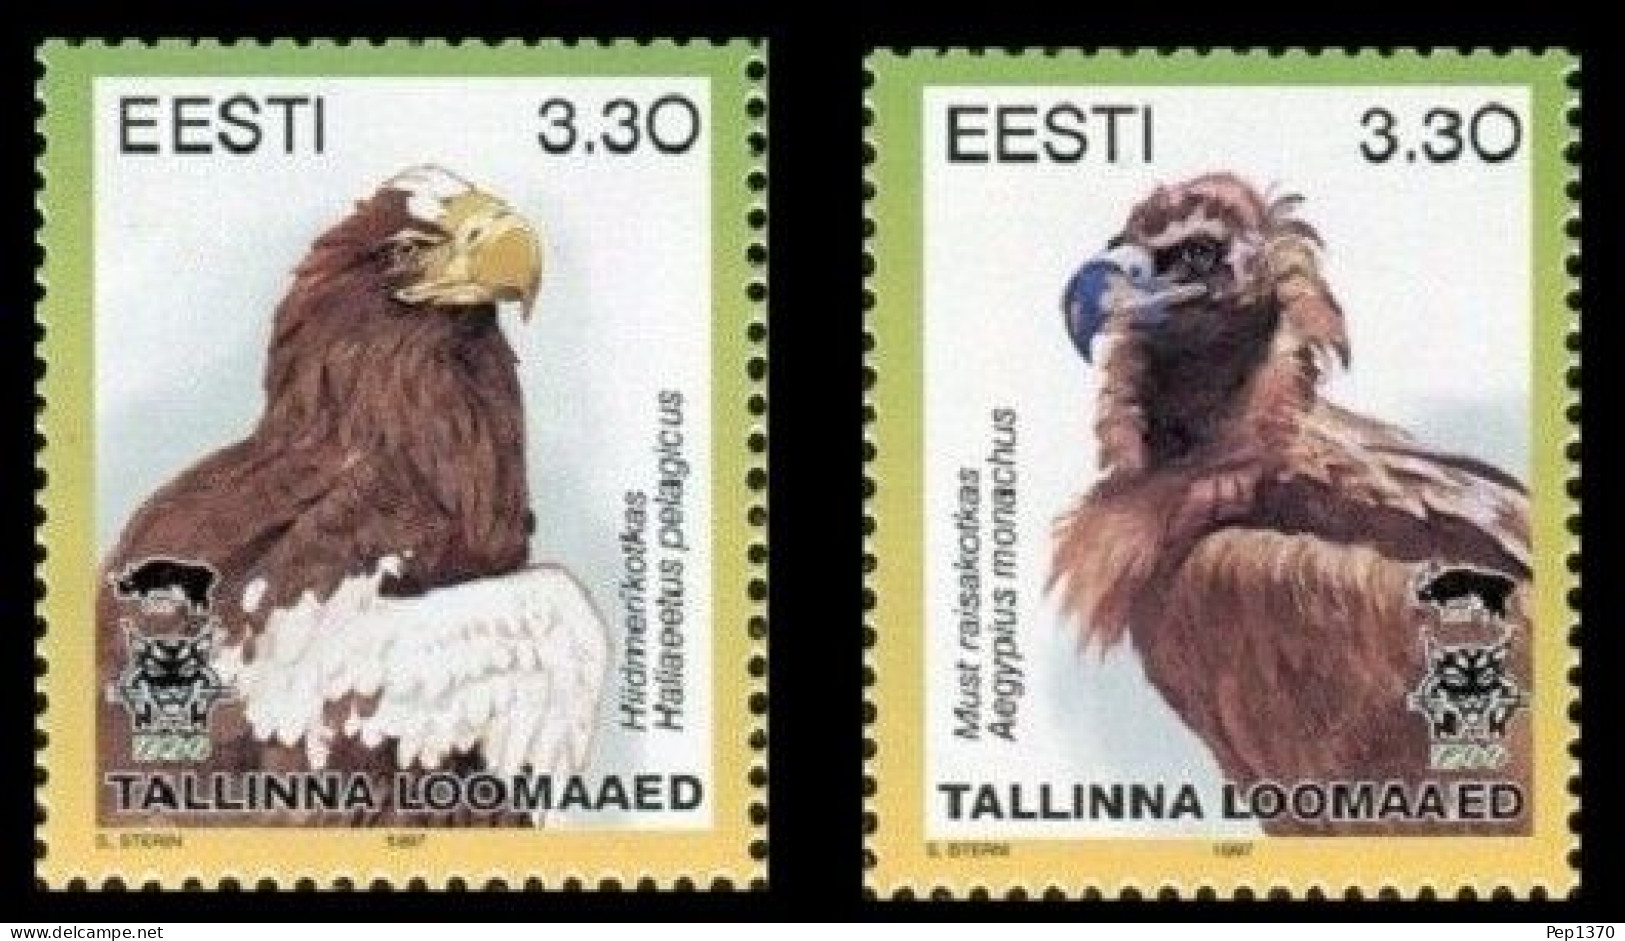 ESTONIA 1997 - ESTONIE - EESTI - AVES - PAJAROS - YVERT PROCEDEN DE HB-11** - Estonie